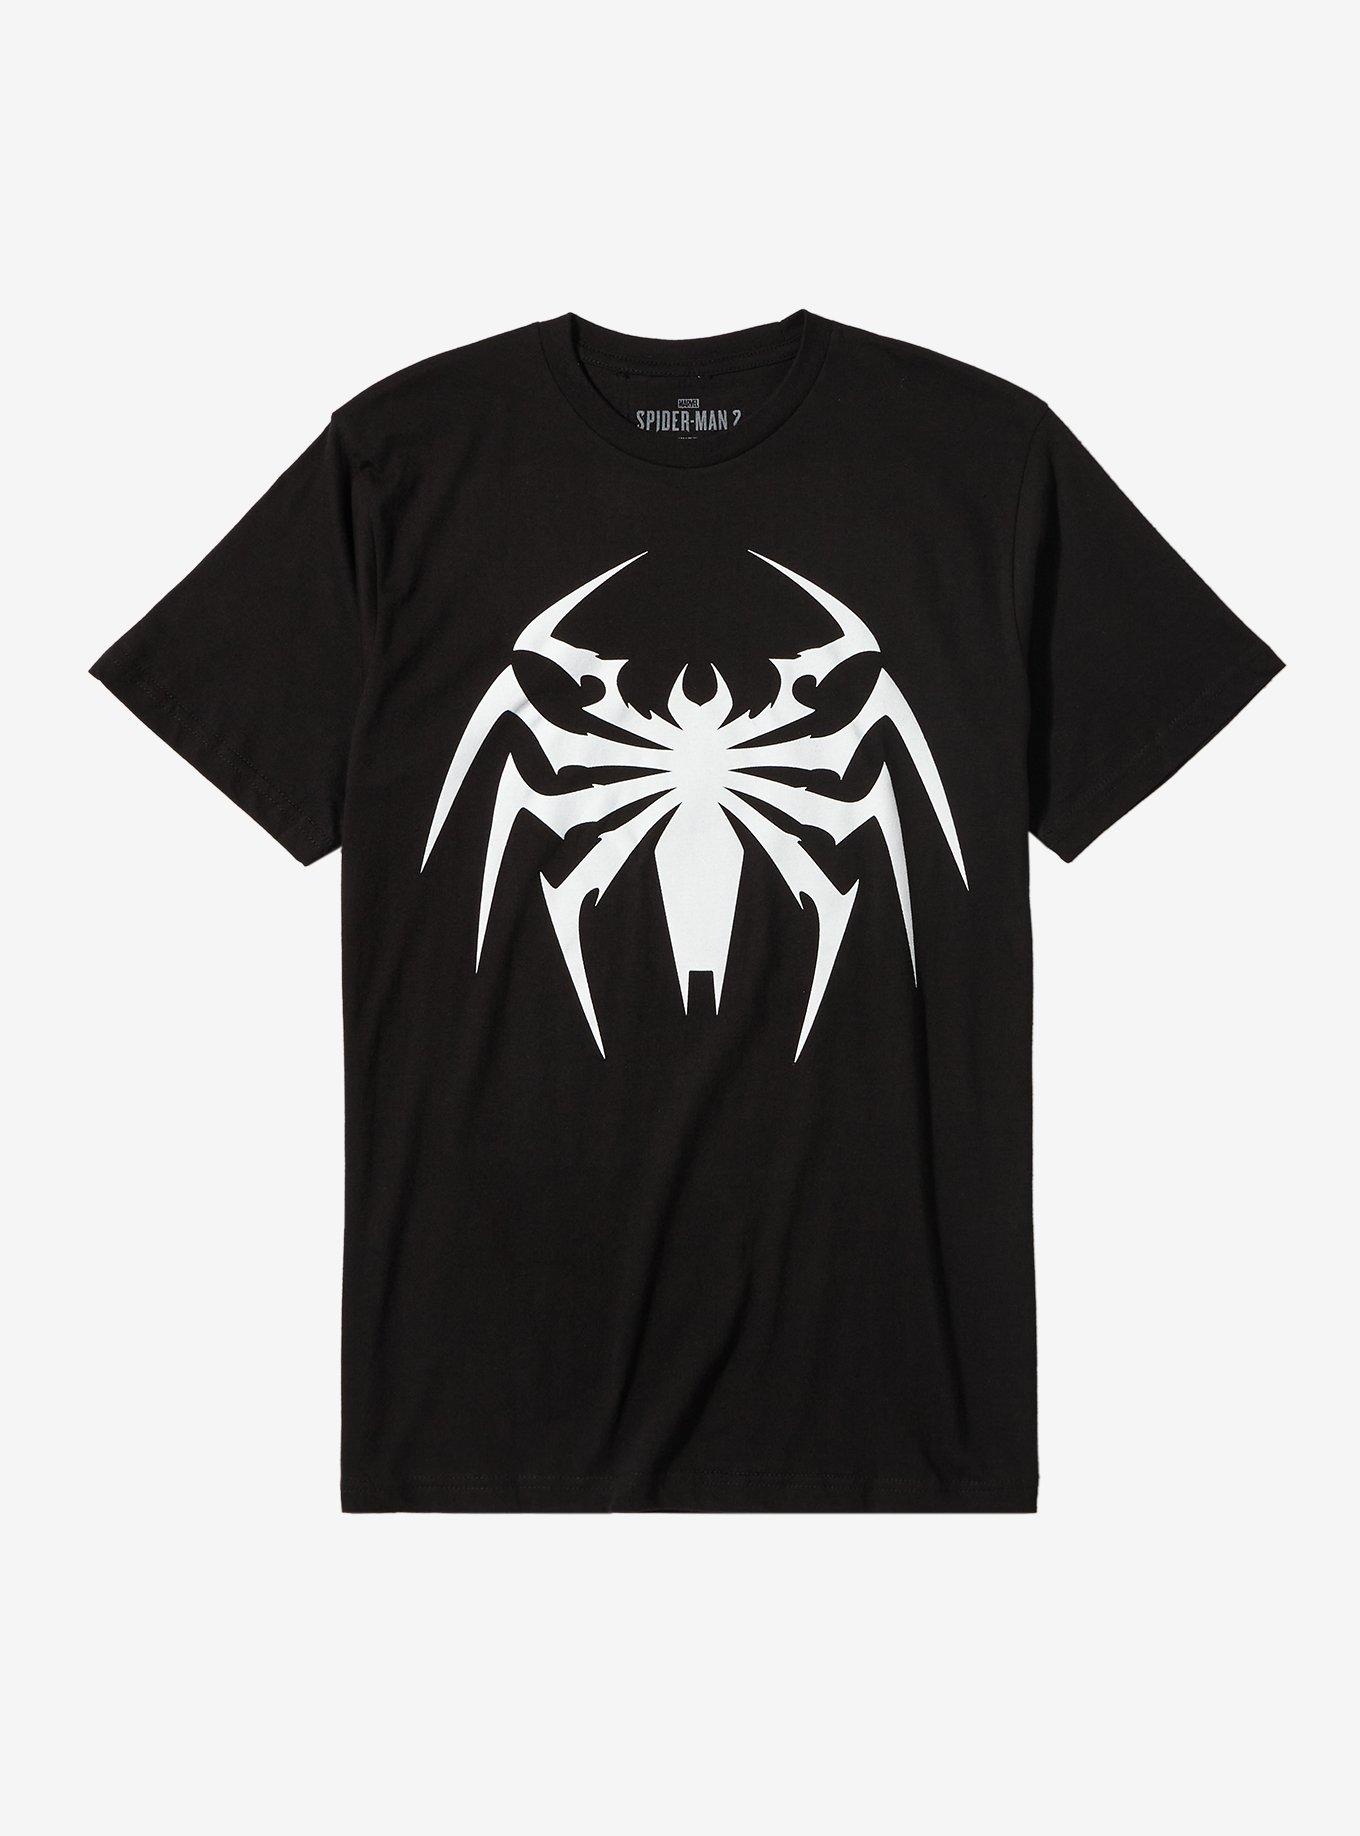 Marvel Spider-Man 2 Venom Logo T-Shirt | Hot Topic